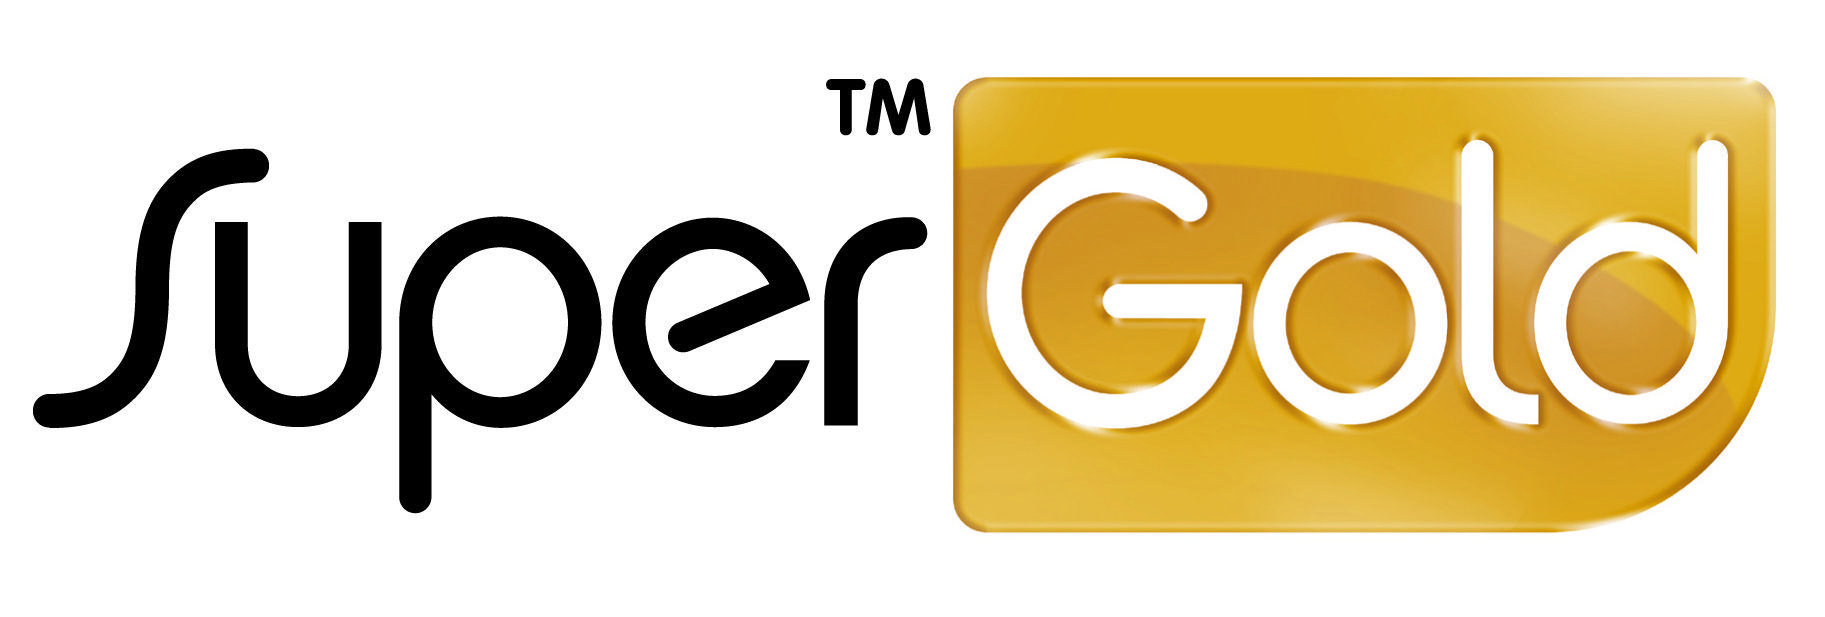 Gold Logo - super gold logo high resolution